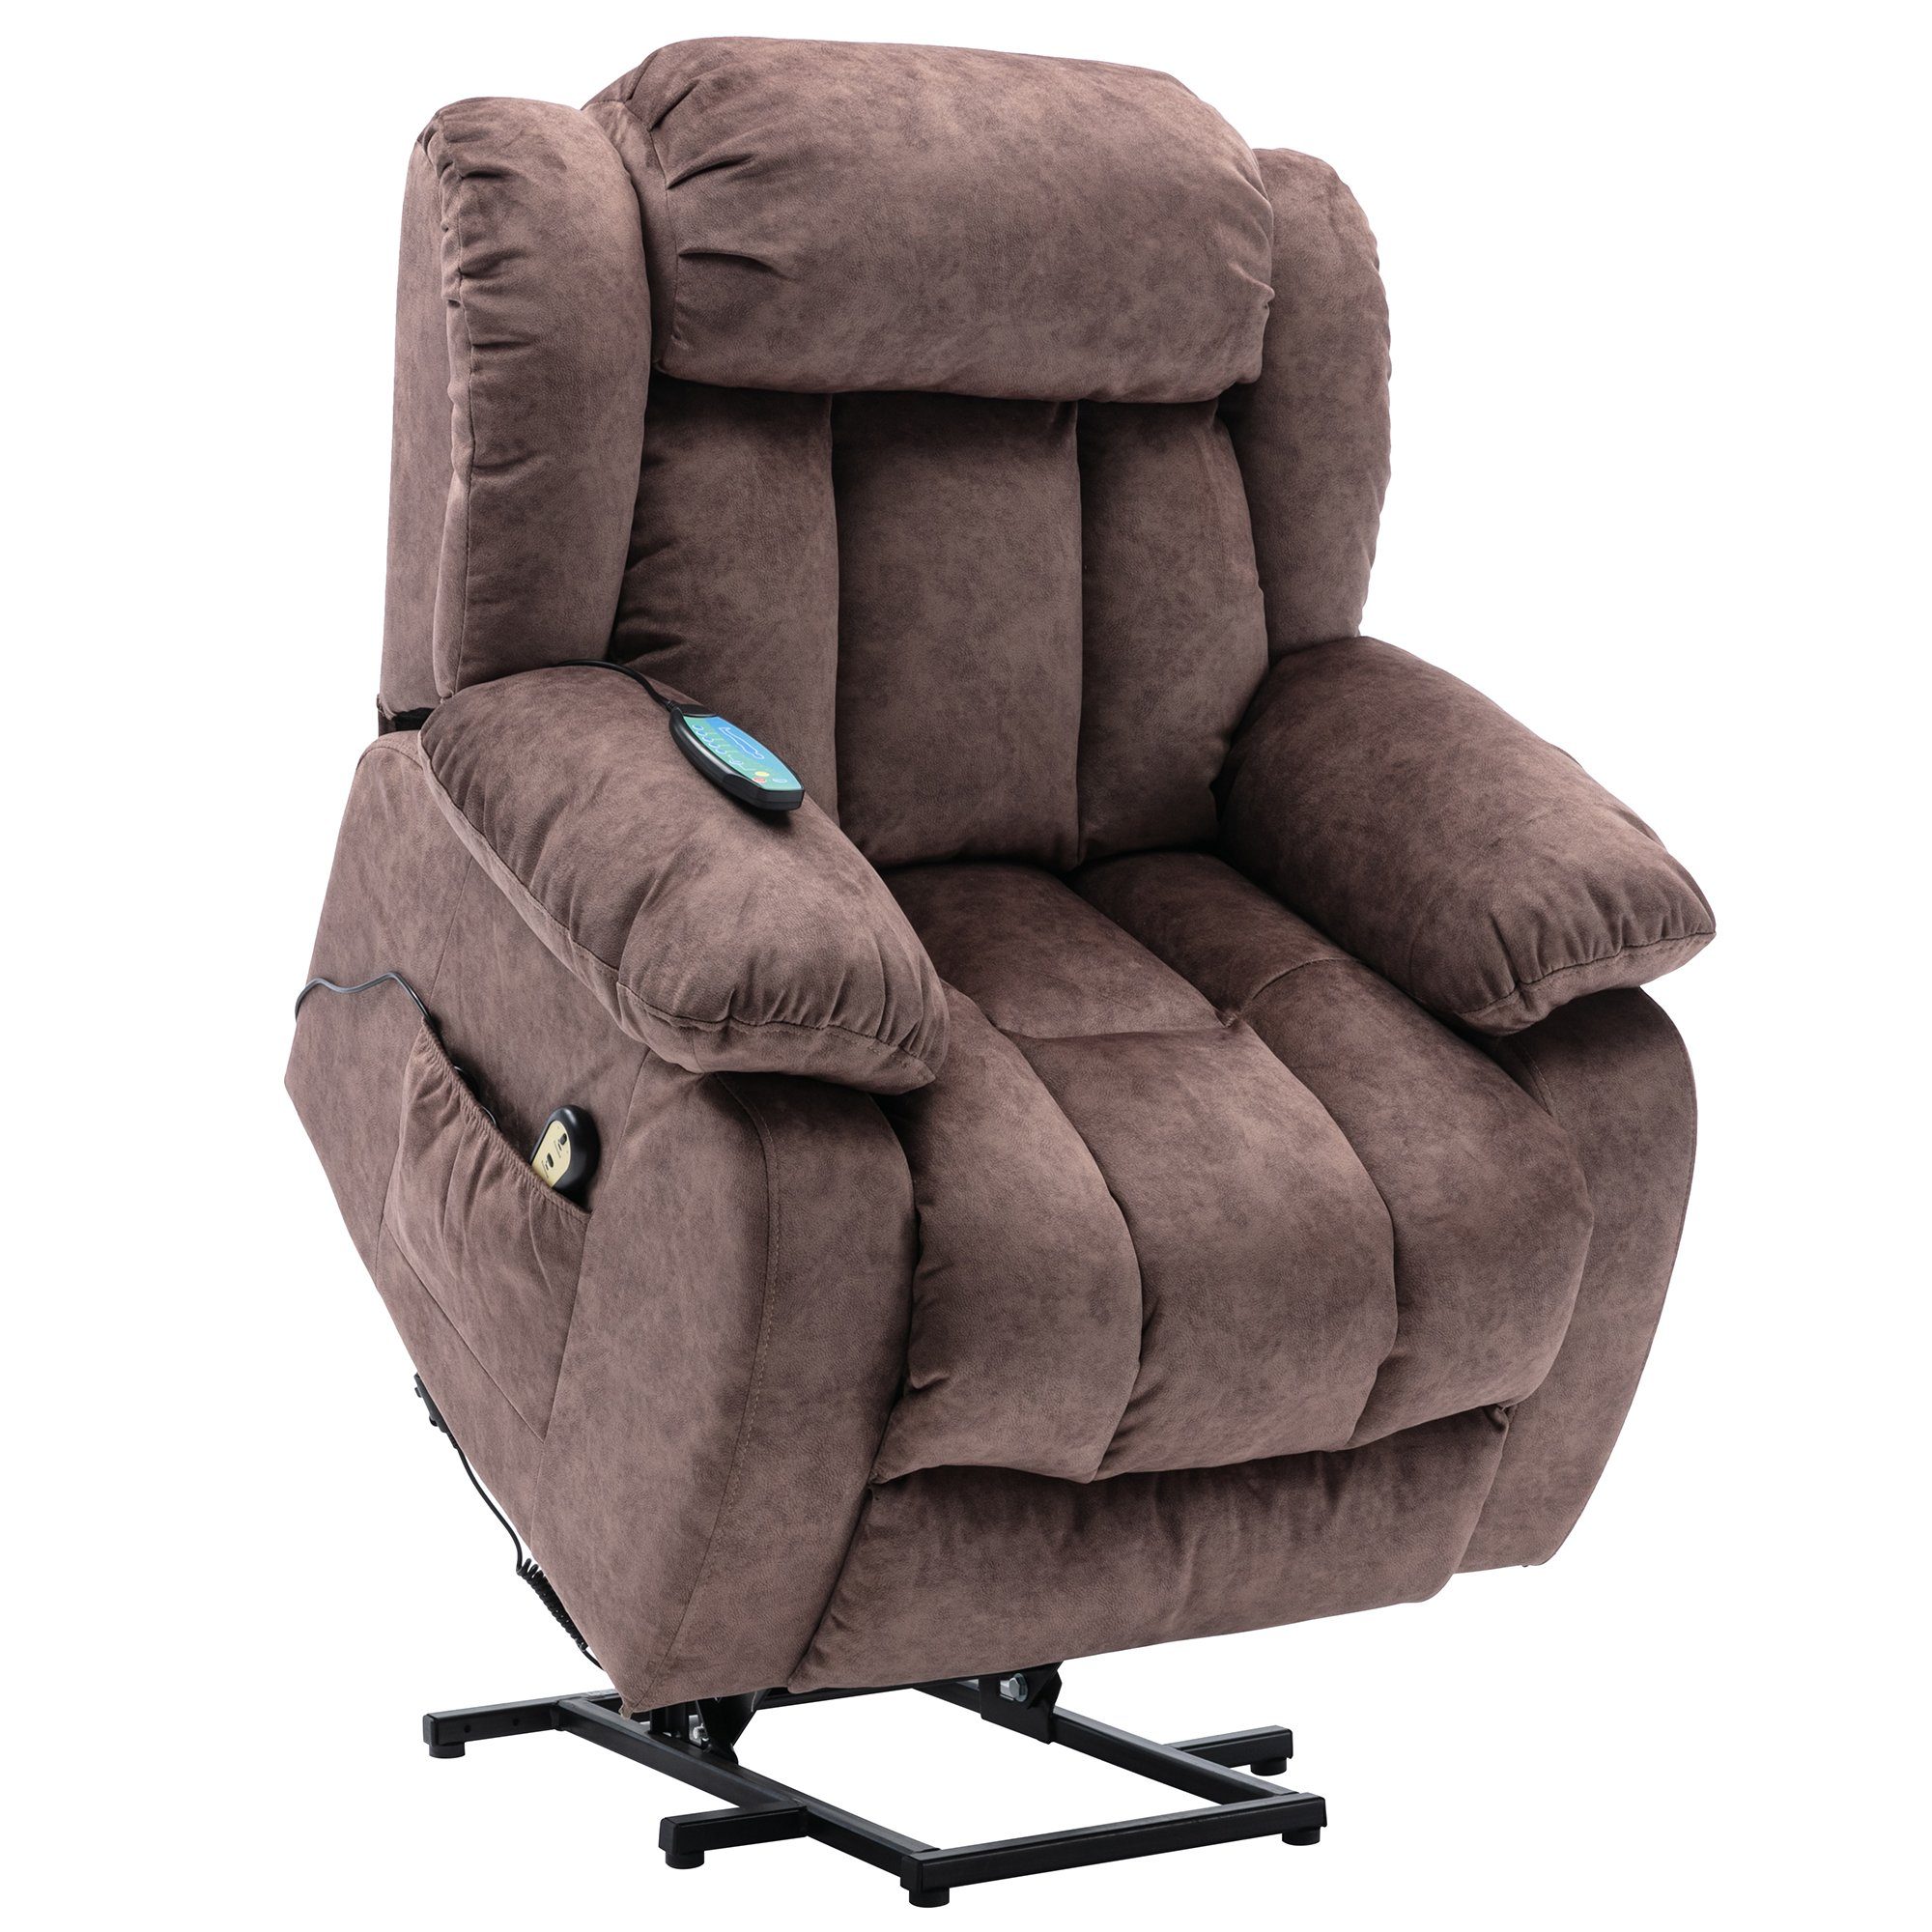 Merax TV-Sessel, Massagesesel mit Wärme und Vibration, USB-verstellbar, beheizt Braun | Funktionssessel